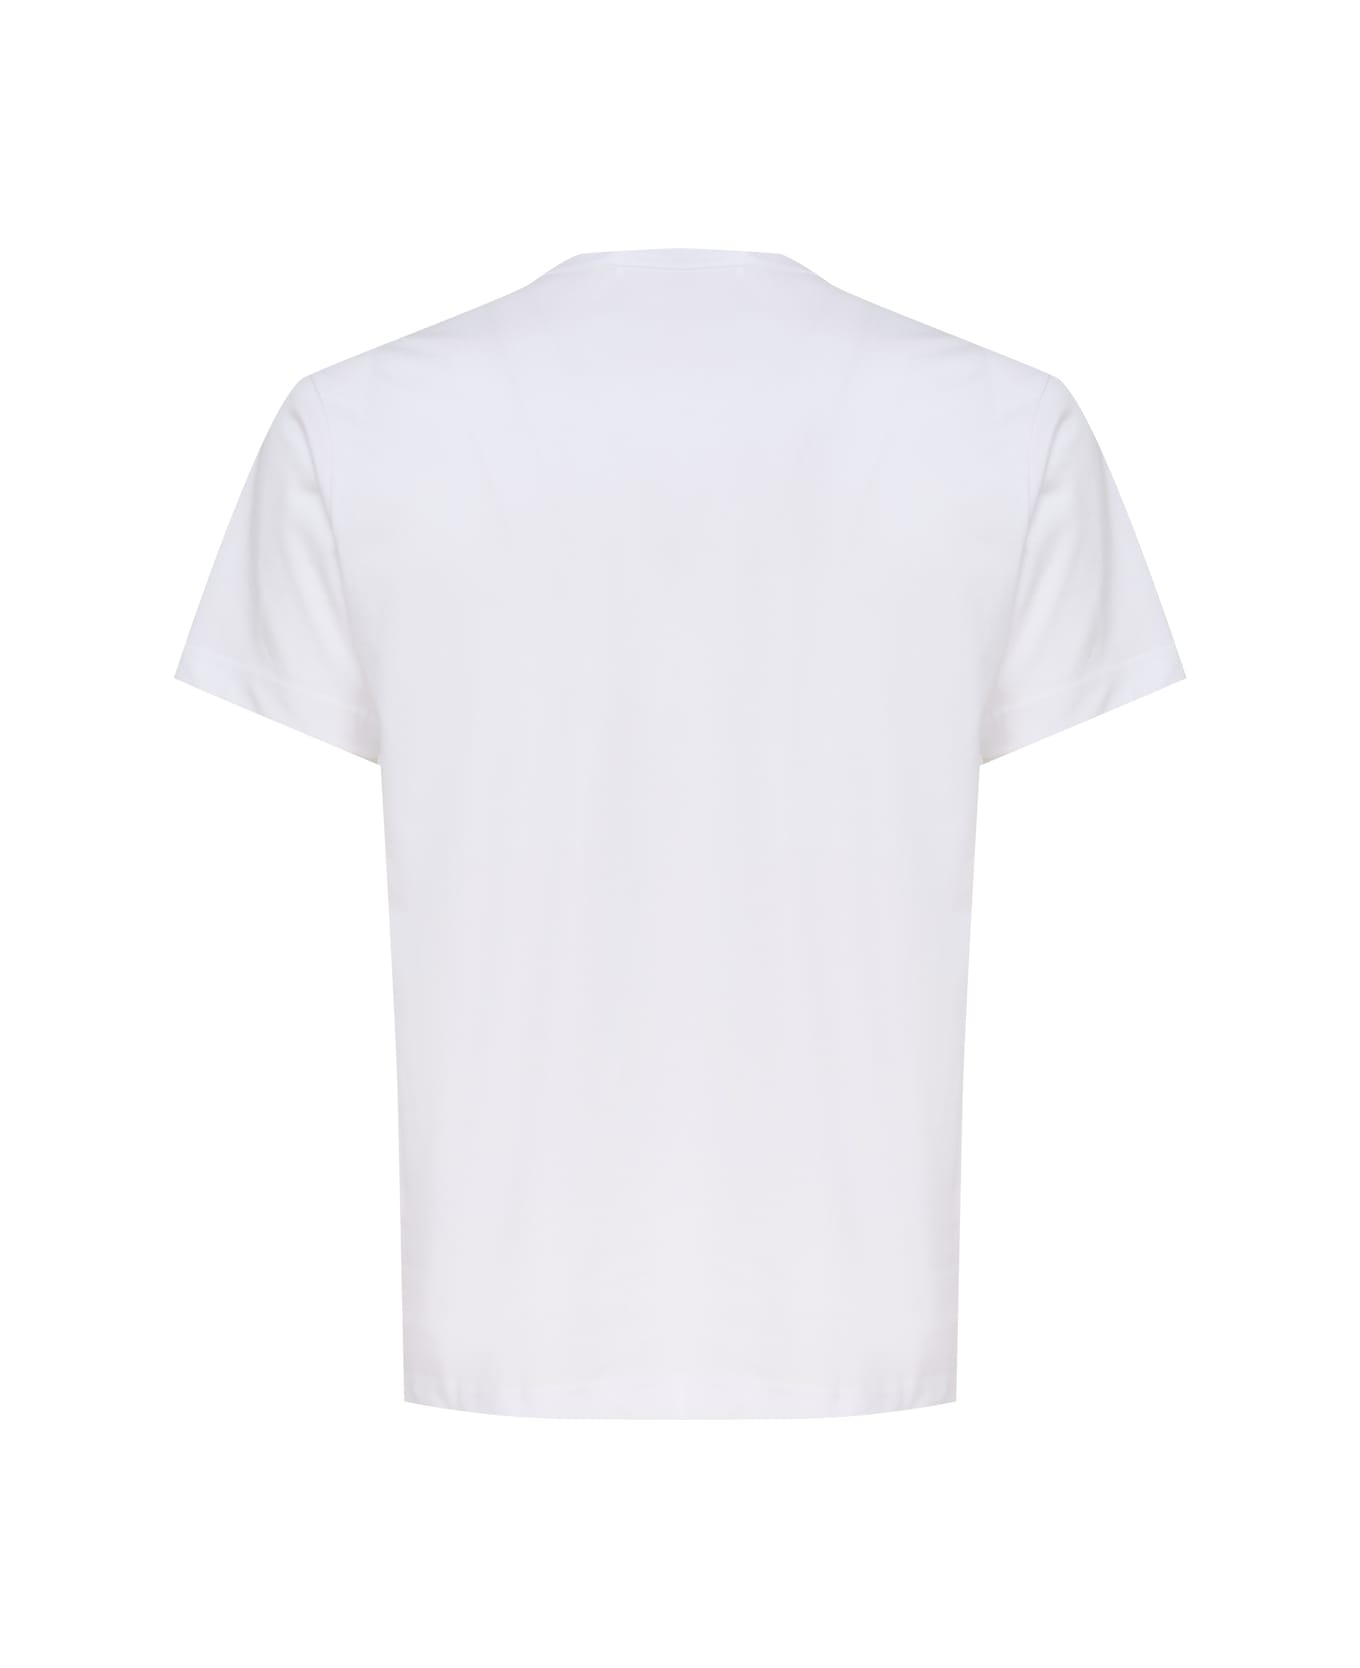 Comme des Garçons Andy Warhol T-shirt - White シャツ